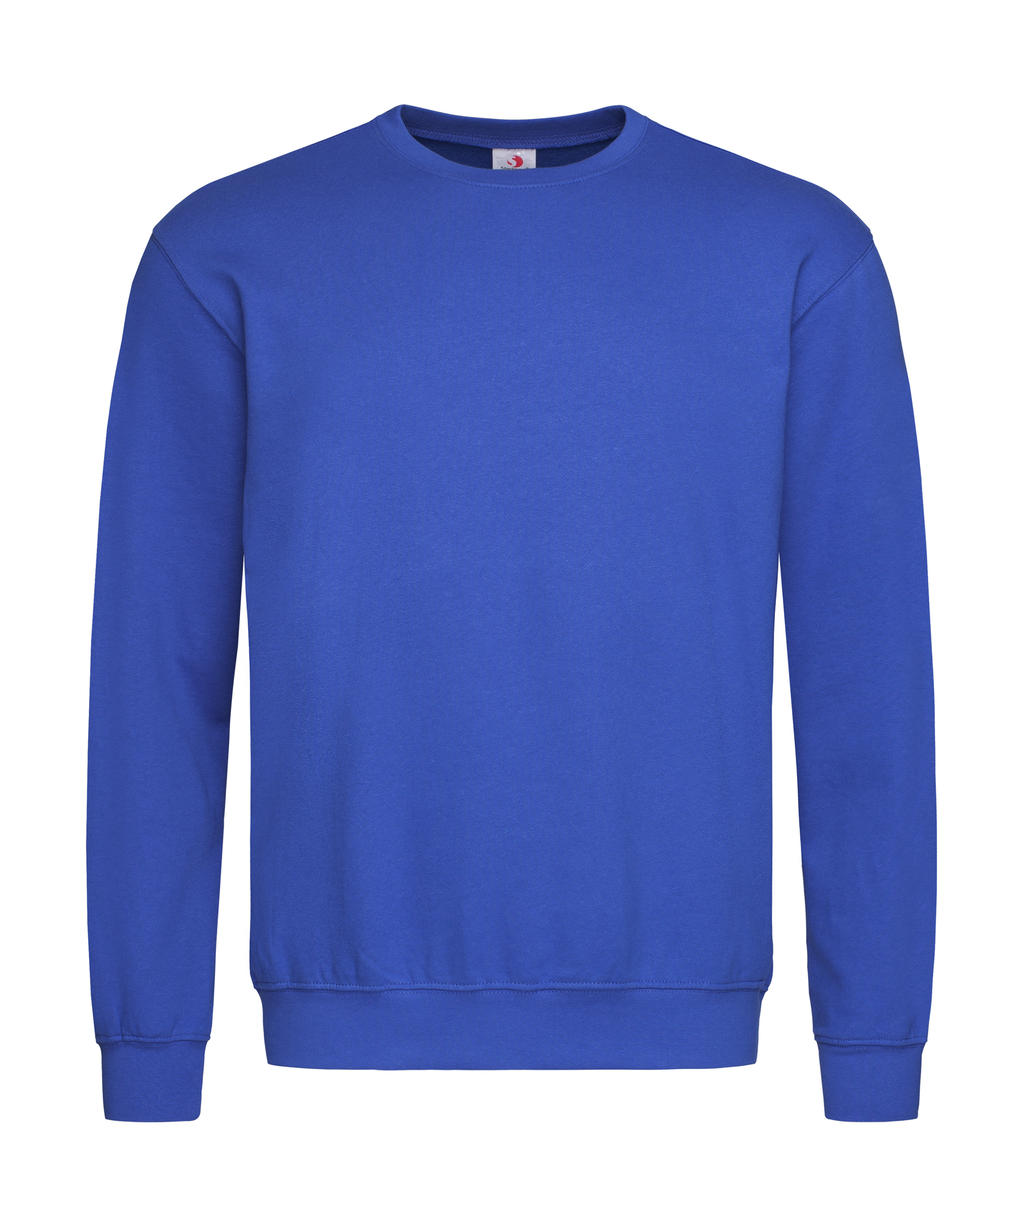  Unisex Sweatshirt Classic in Farbe Bright Royal